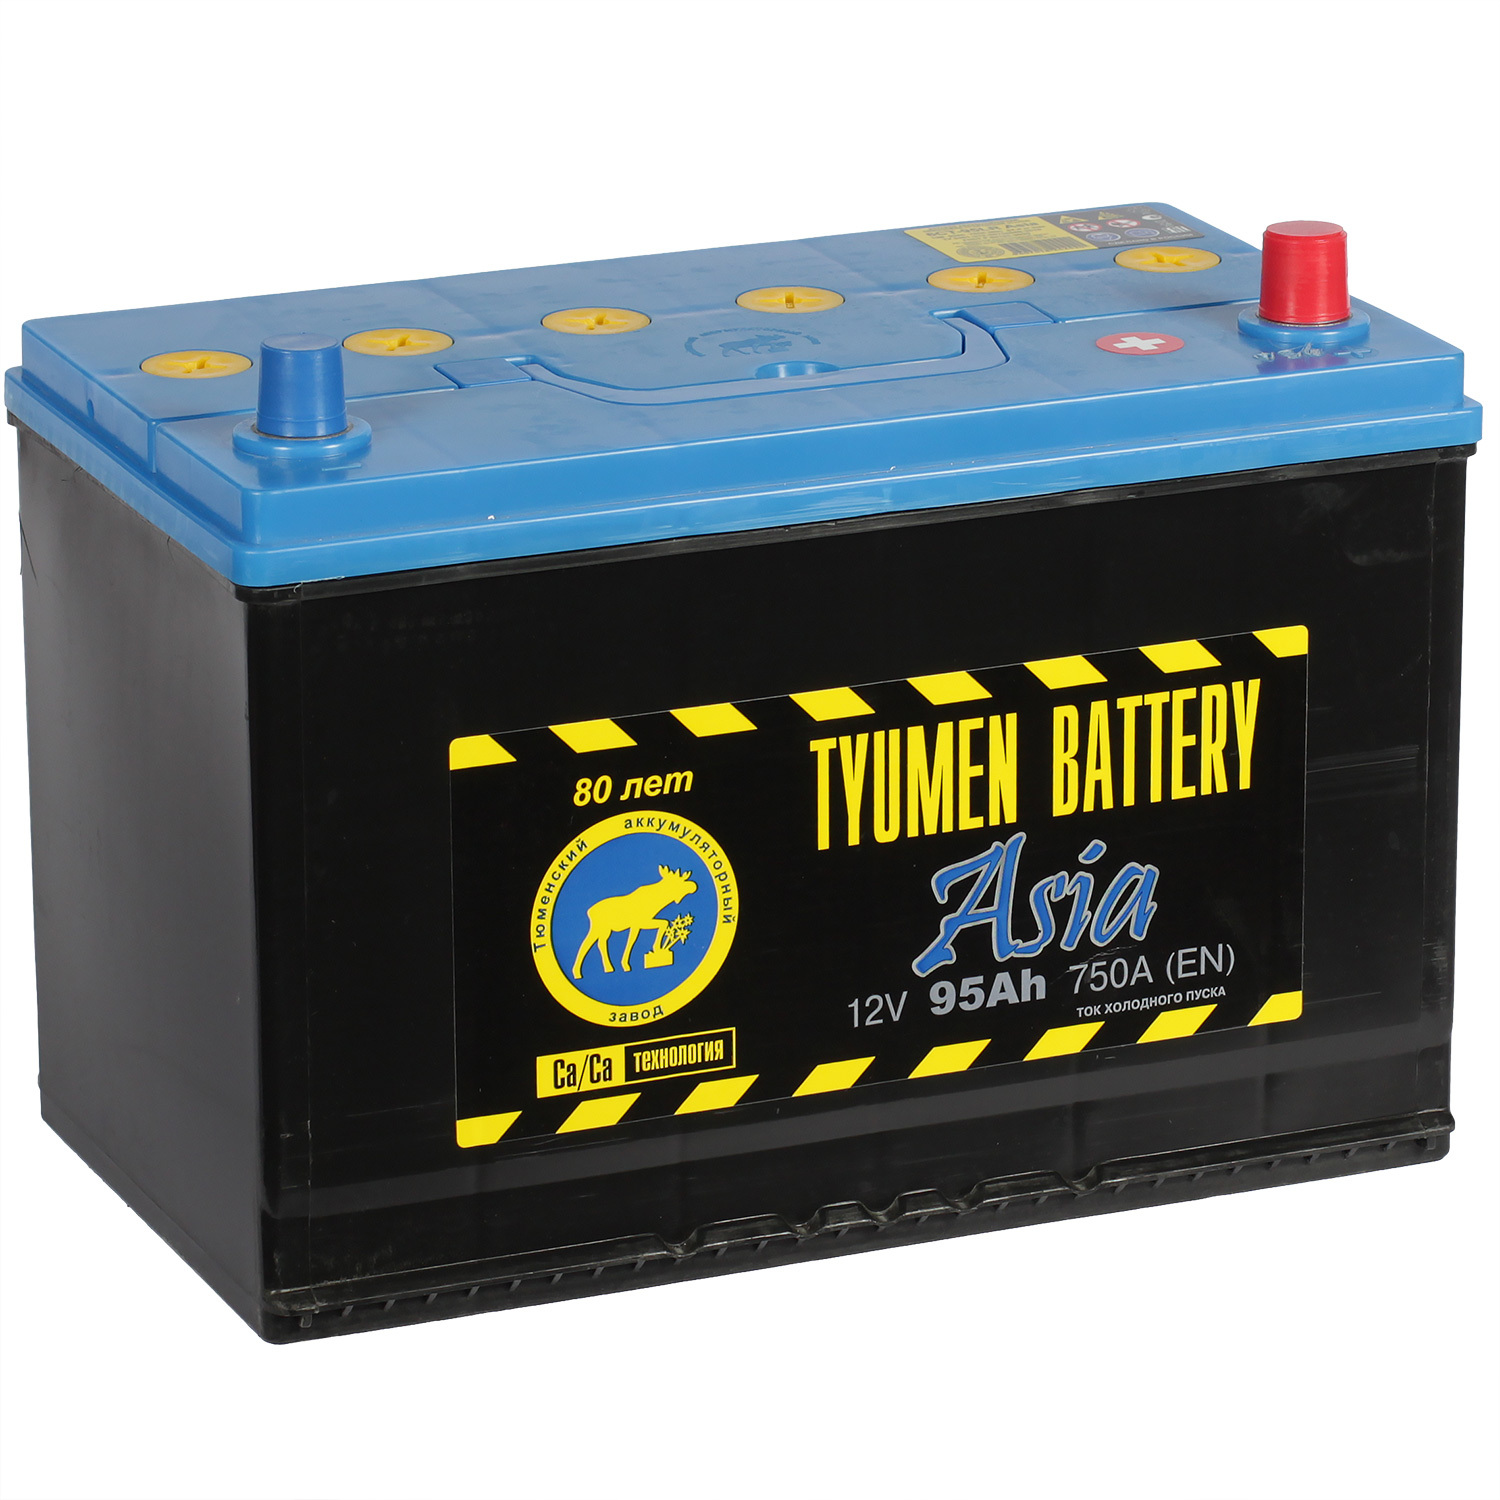 Tyumen Battery Автомобильный аккумулятор Tyumen Battery 95 Ач обратная полярность D31L tyumen battery автомобильный аккумулятор tyumen battery standard 55 ач прямая полярность l2